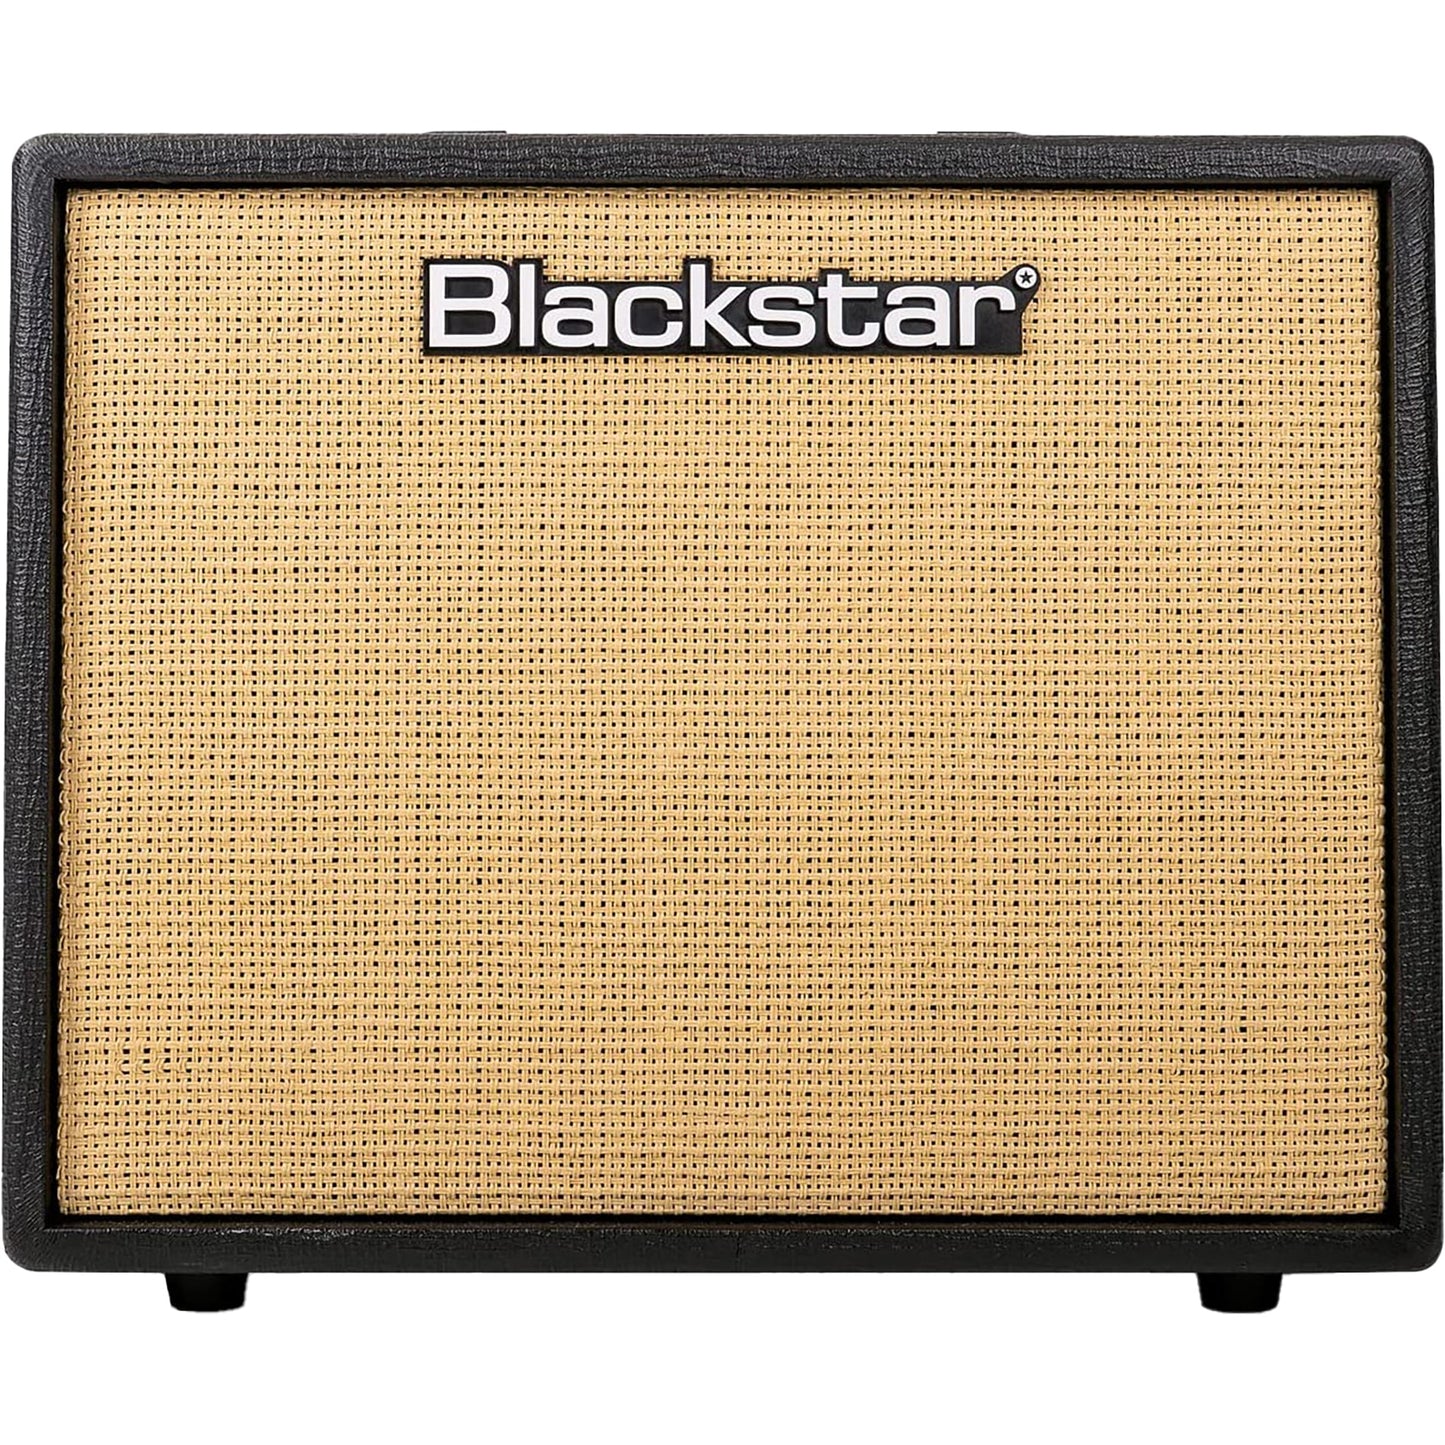 Blackstar DEBUT 50R 50W 1x12 Combo Amp, Black